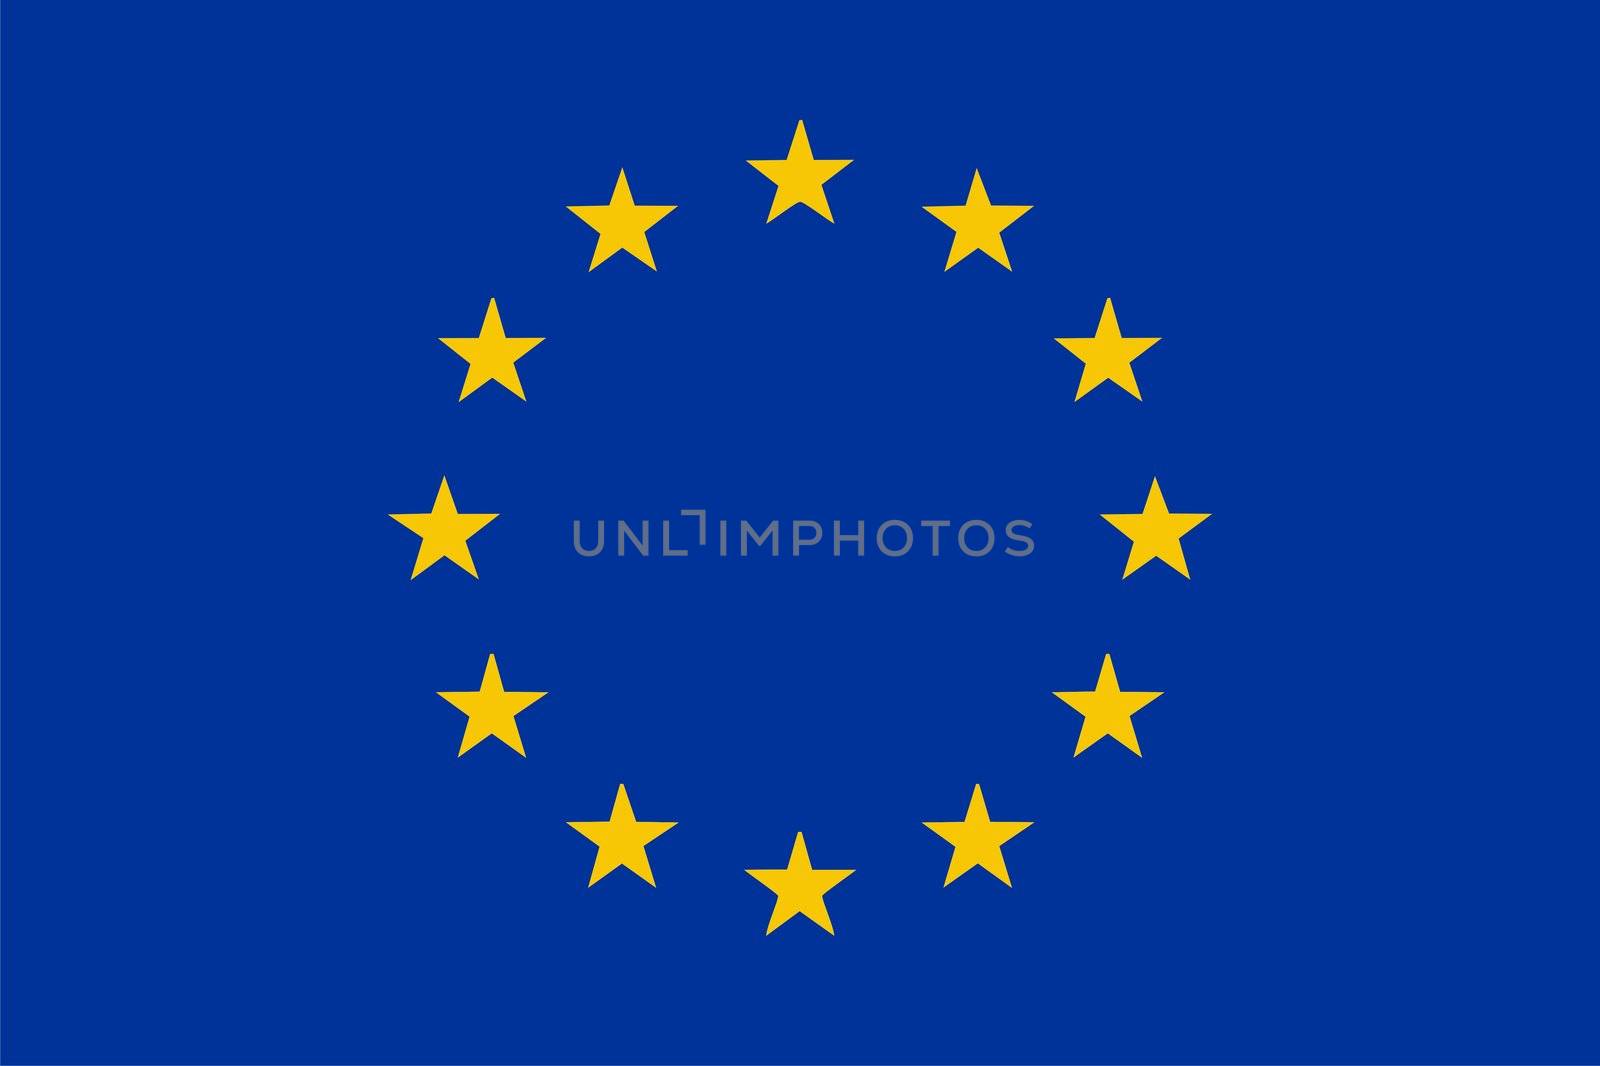 flag of the European Union - isolated vector illustration